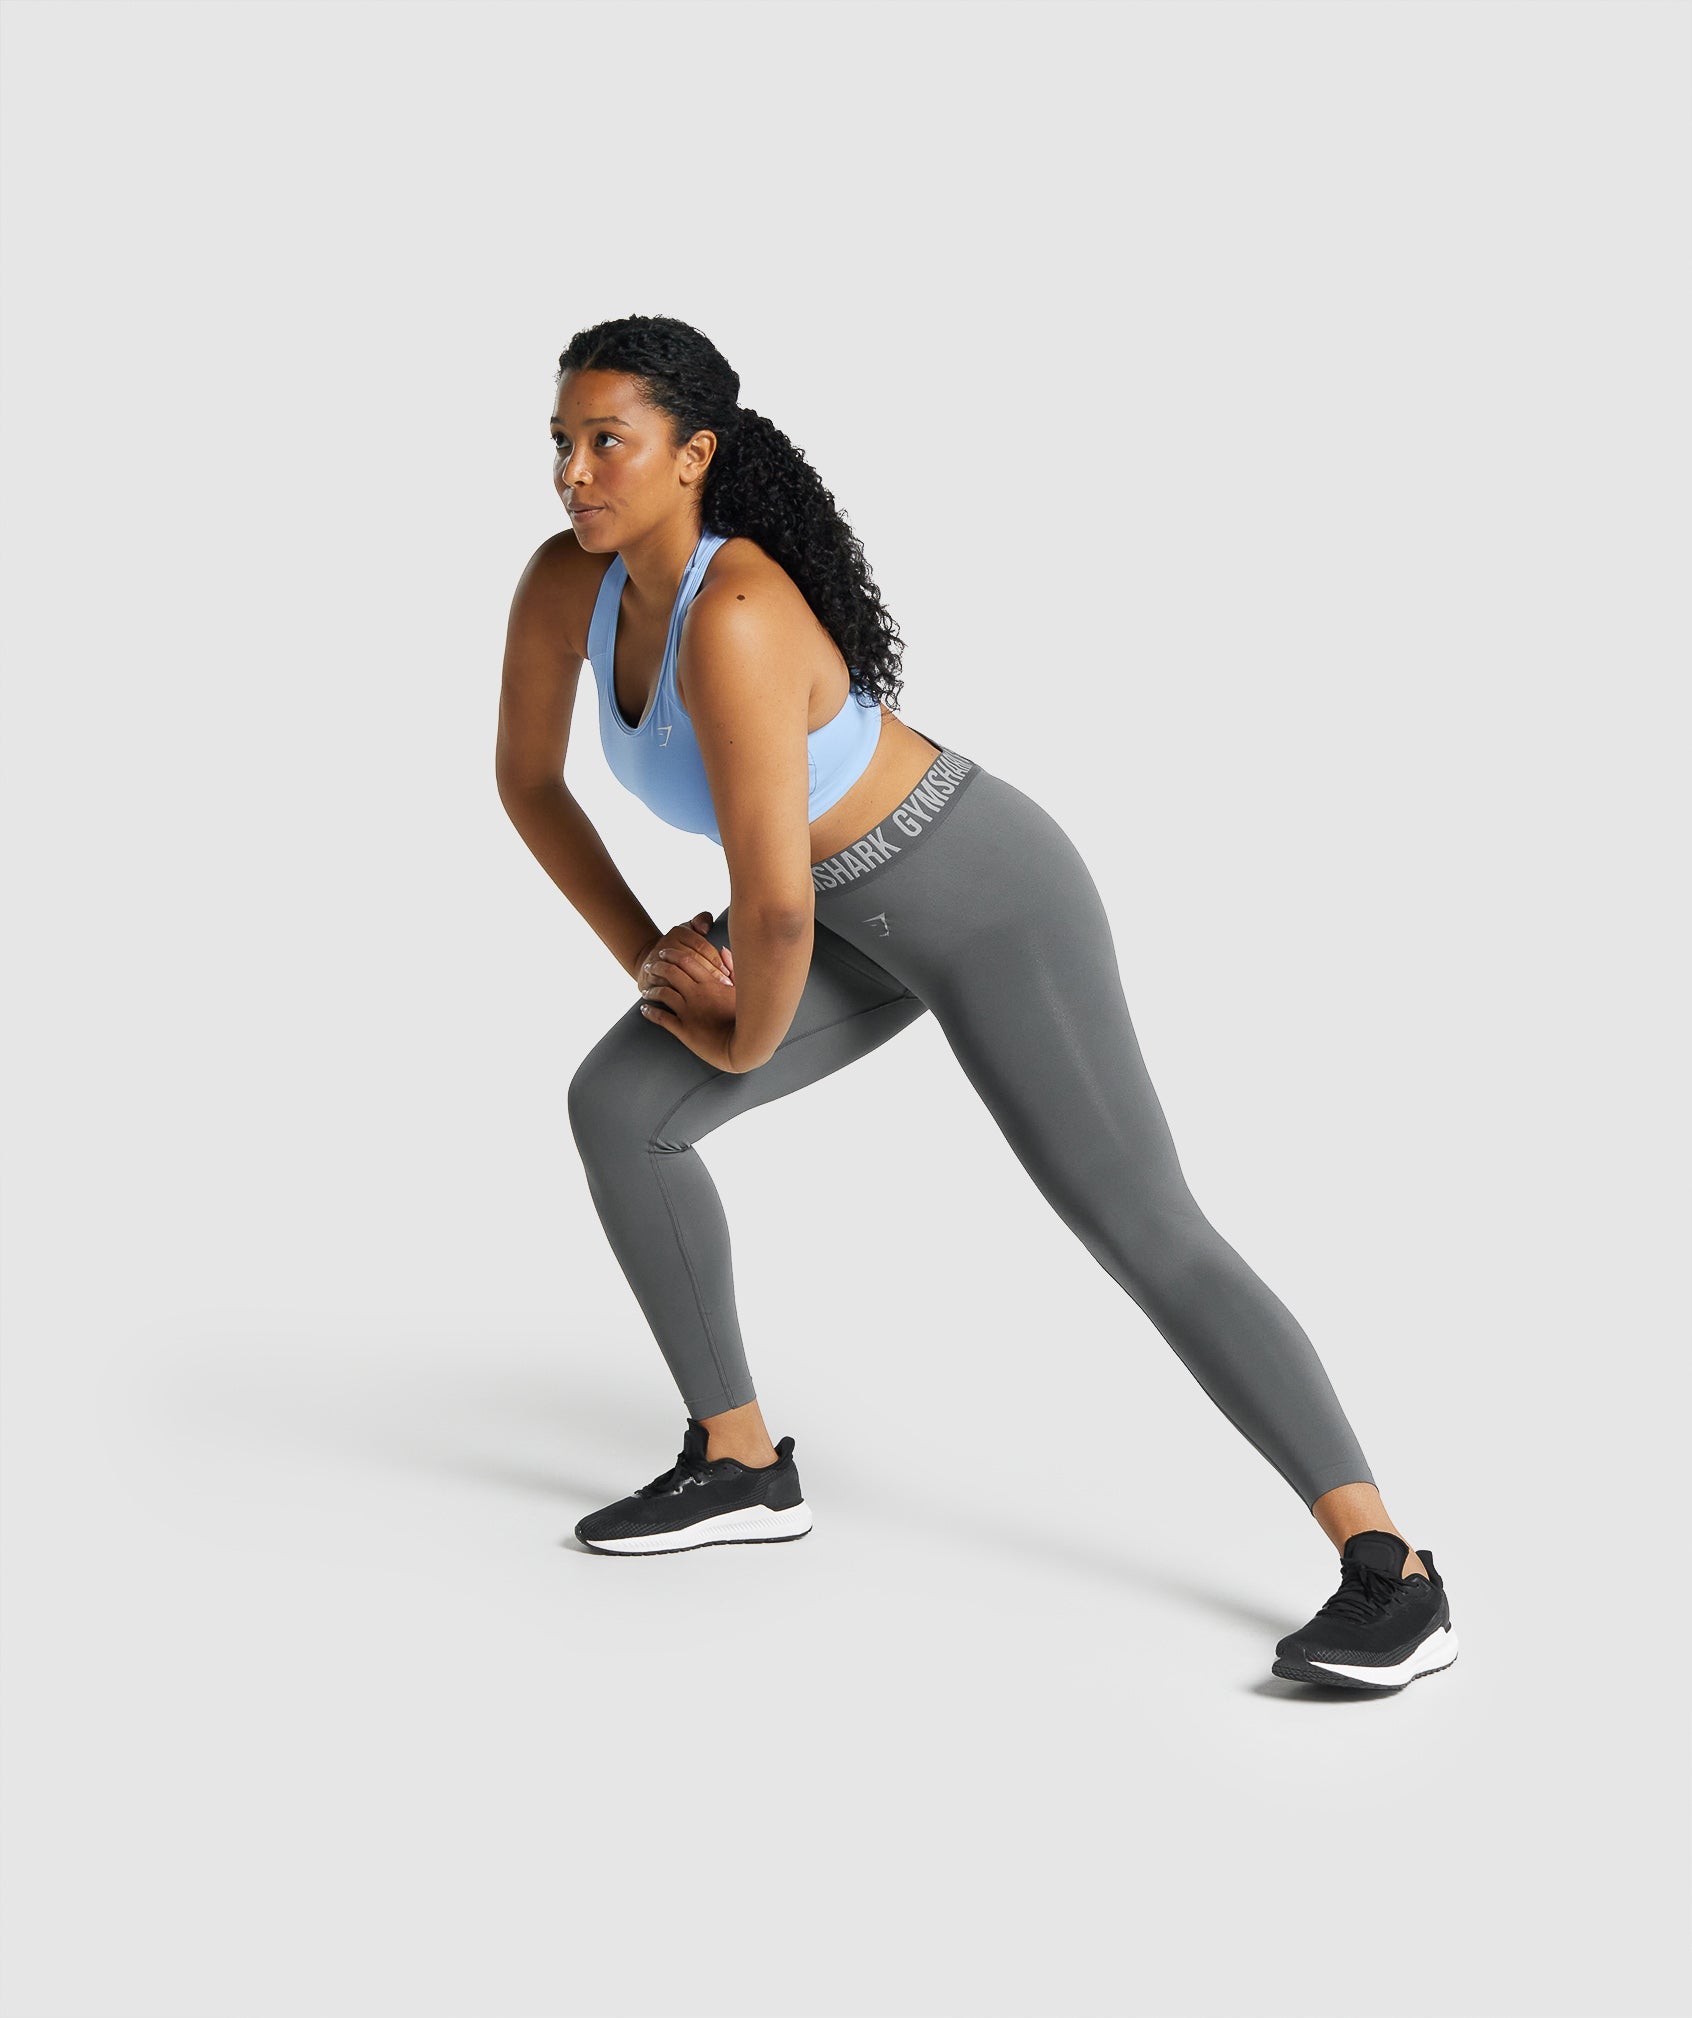 Gymshark Fit Seamless Workout Gym Leggings Grey Size M / L